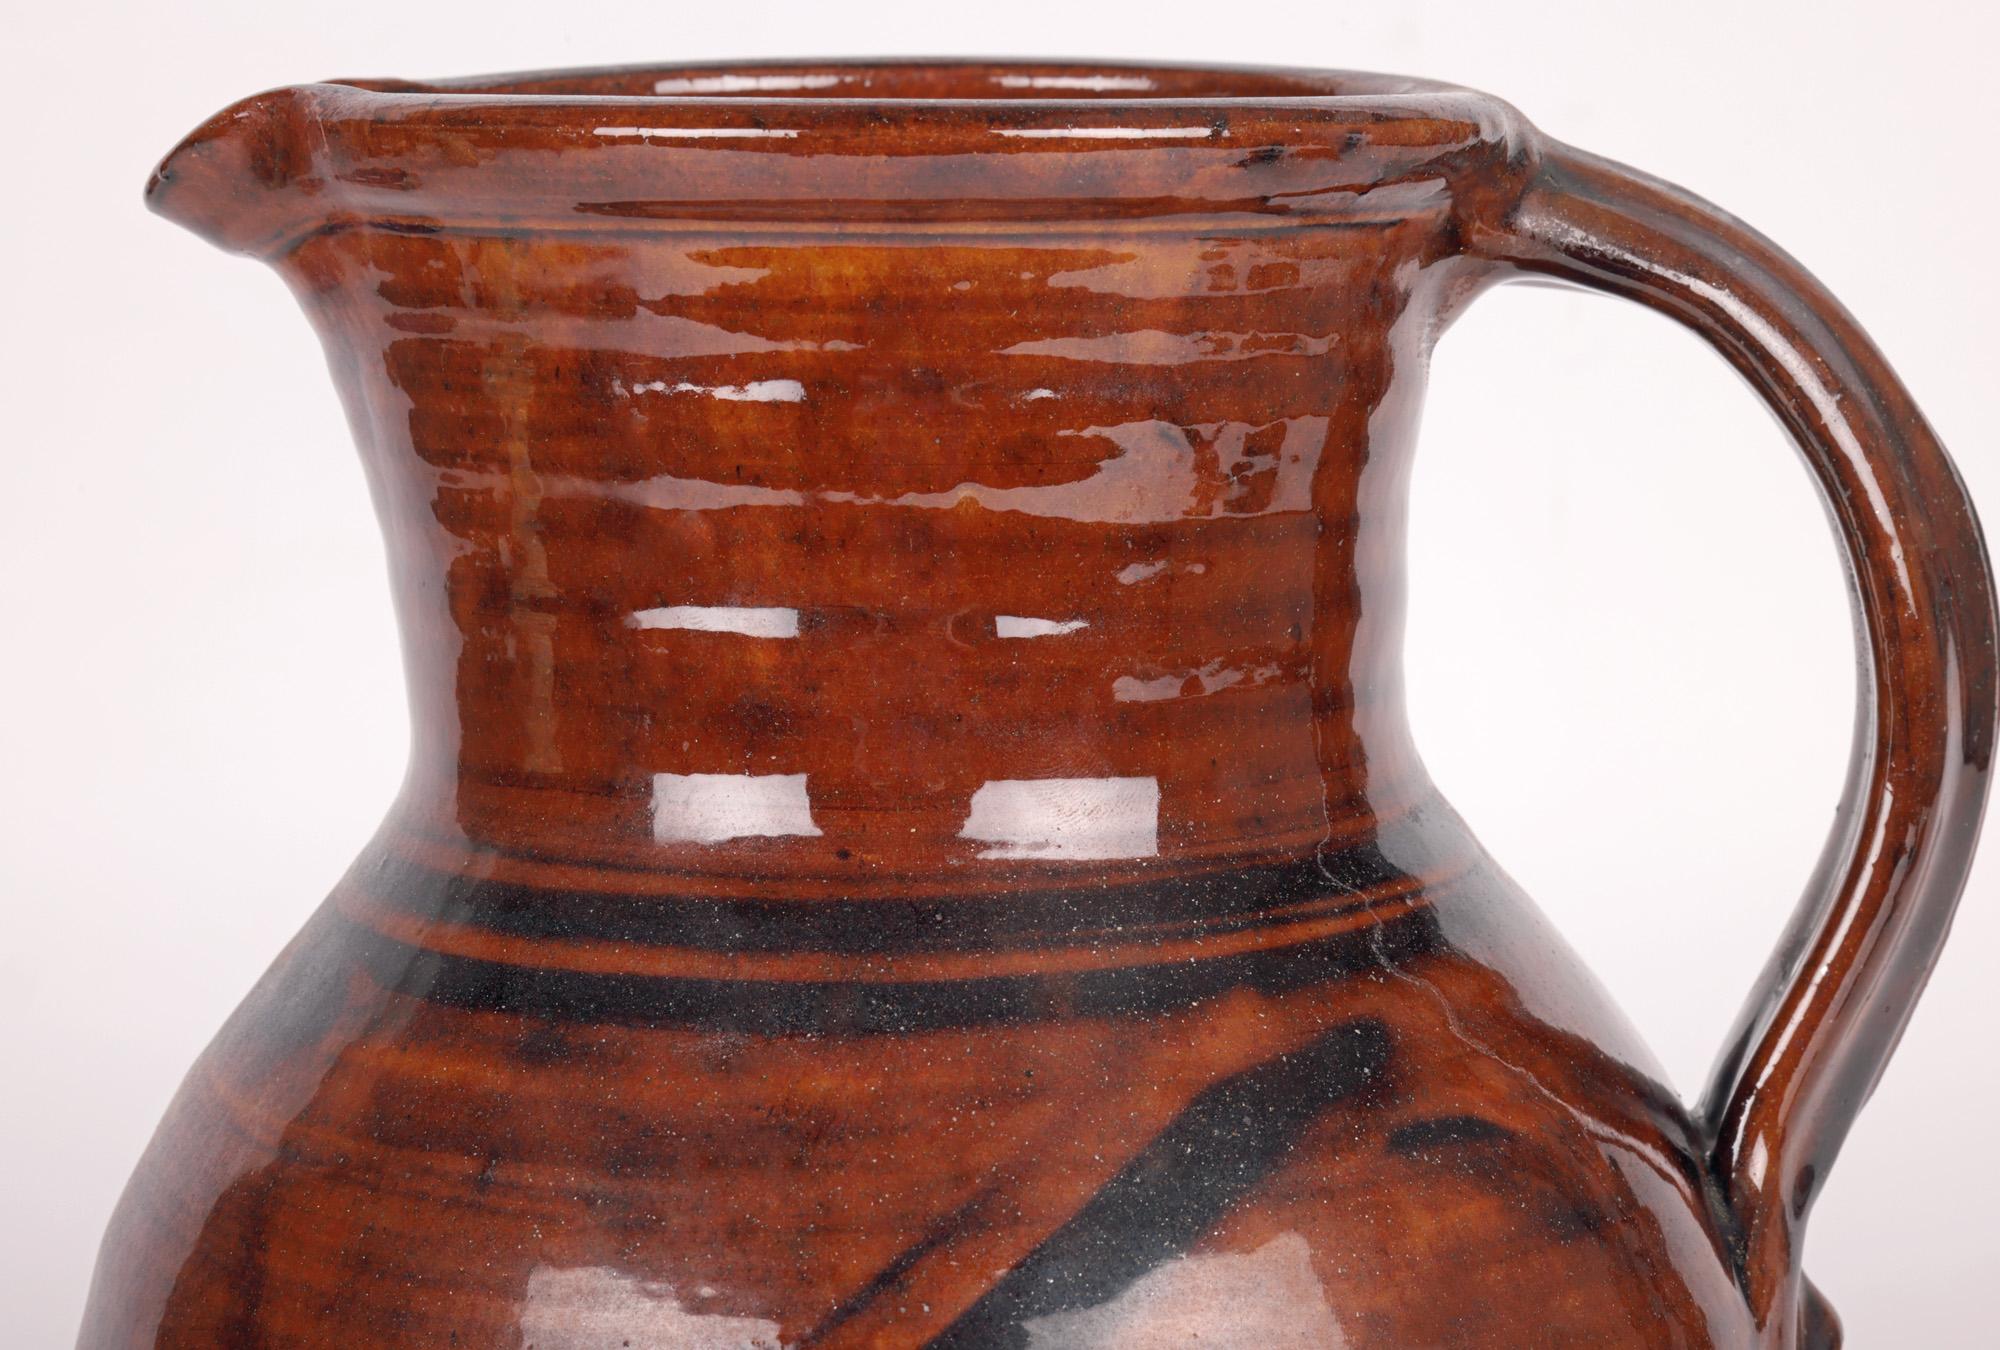 clive bowen pottery for sale